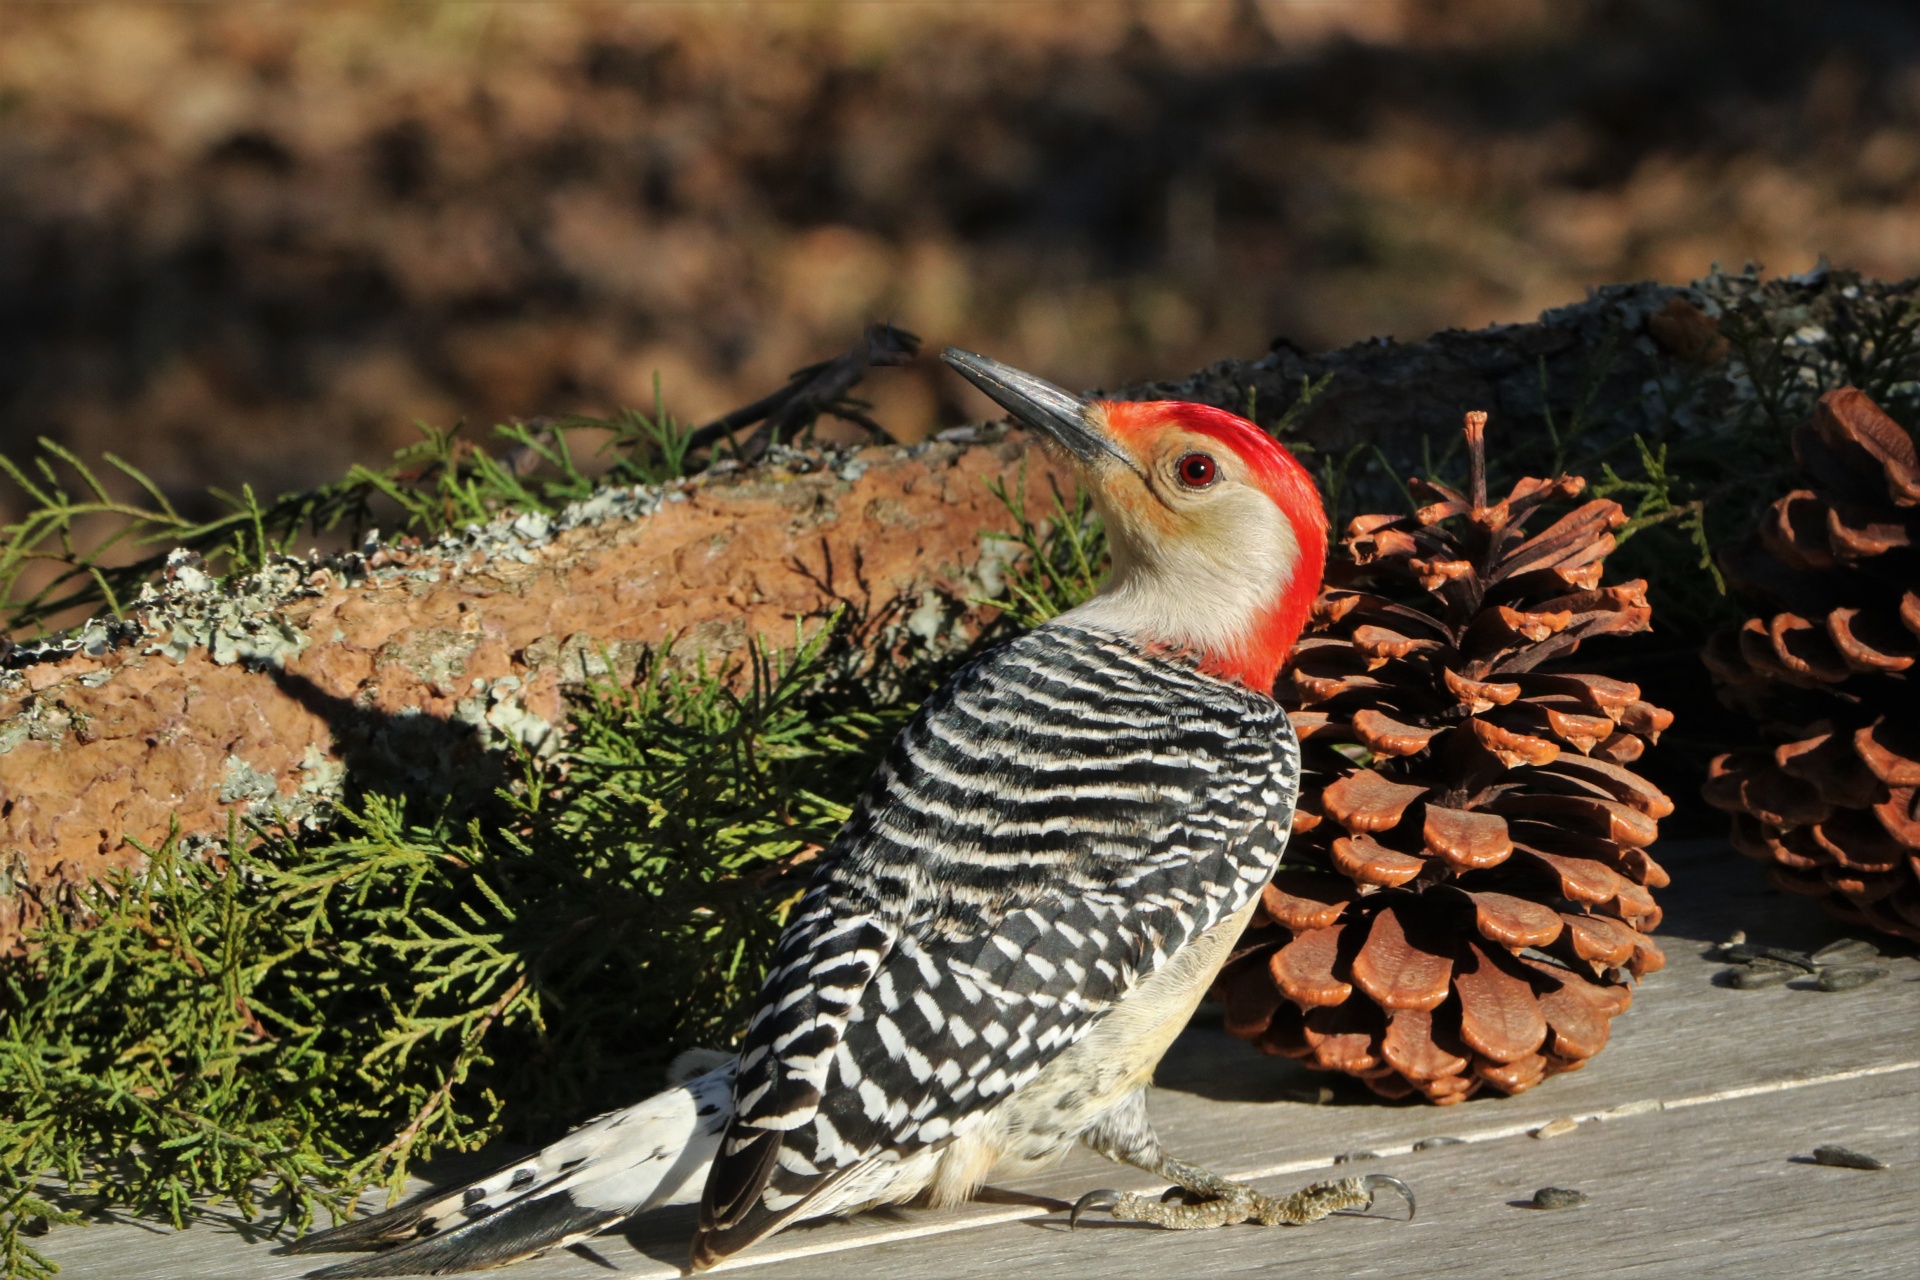 Red-bellied Woodpecker On Table 2